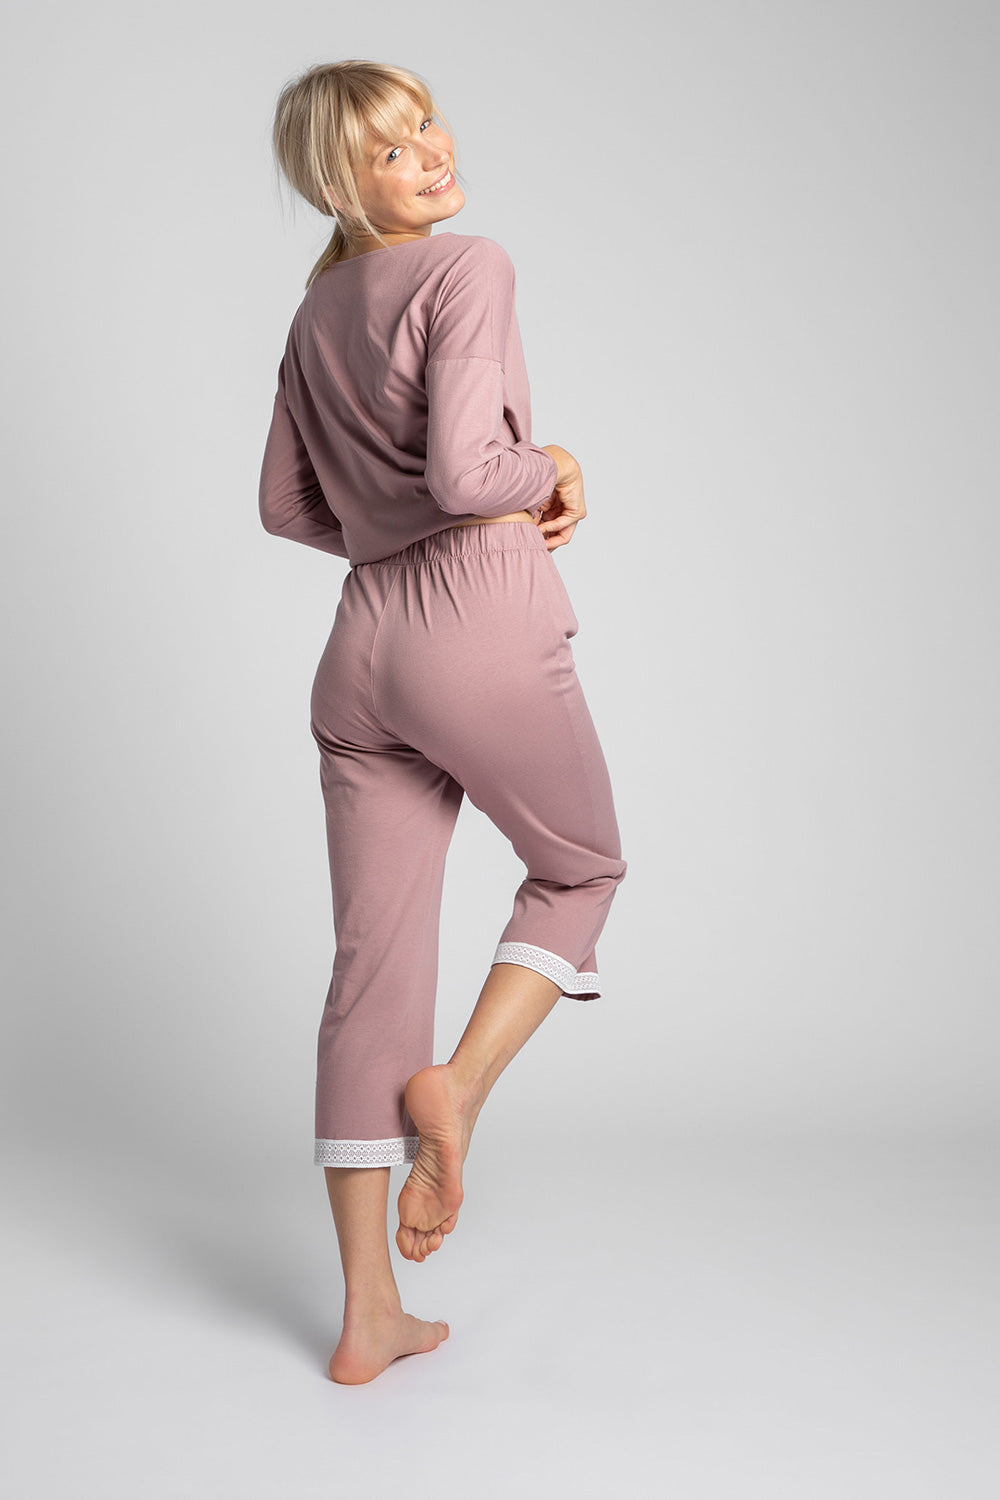 Pyjama pants model 150481 LaLupa LaLupa